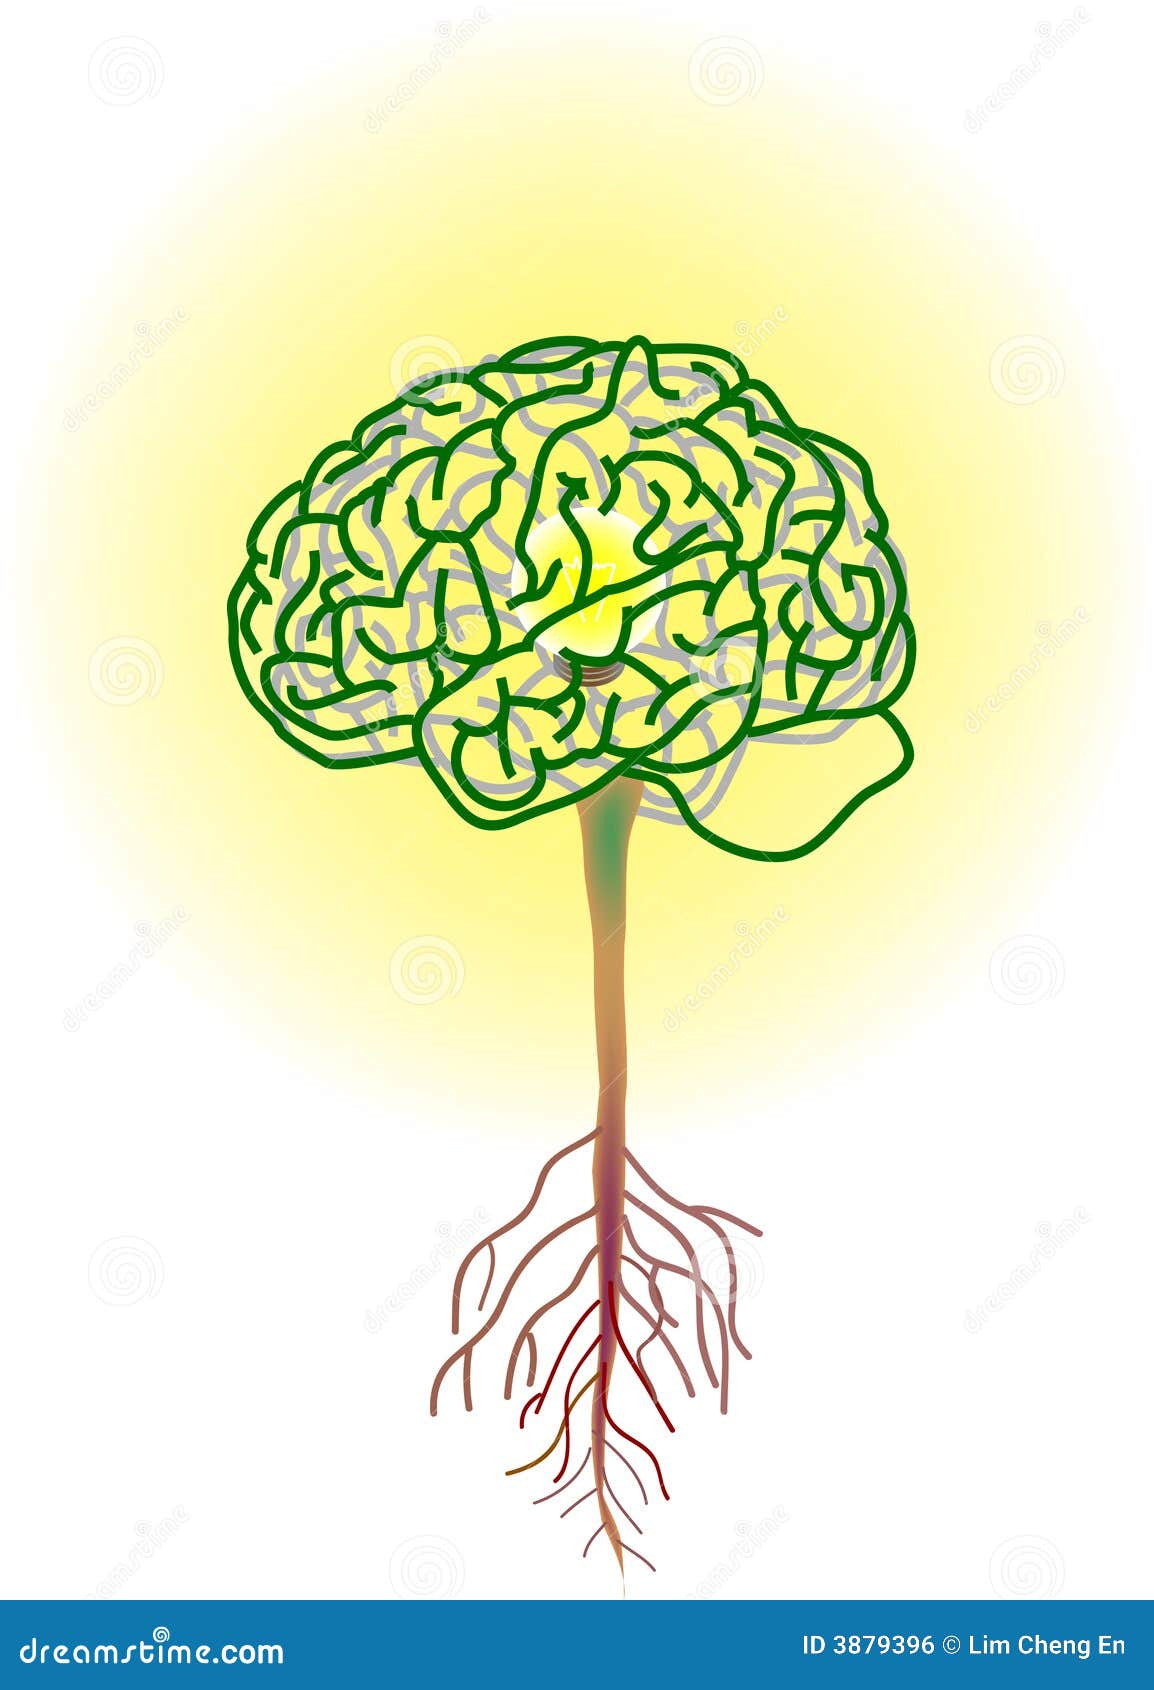 Brain Tree Royalty Free Stock Image - Image: 38793961028 x 1300